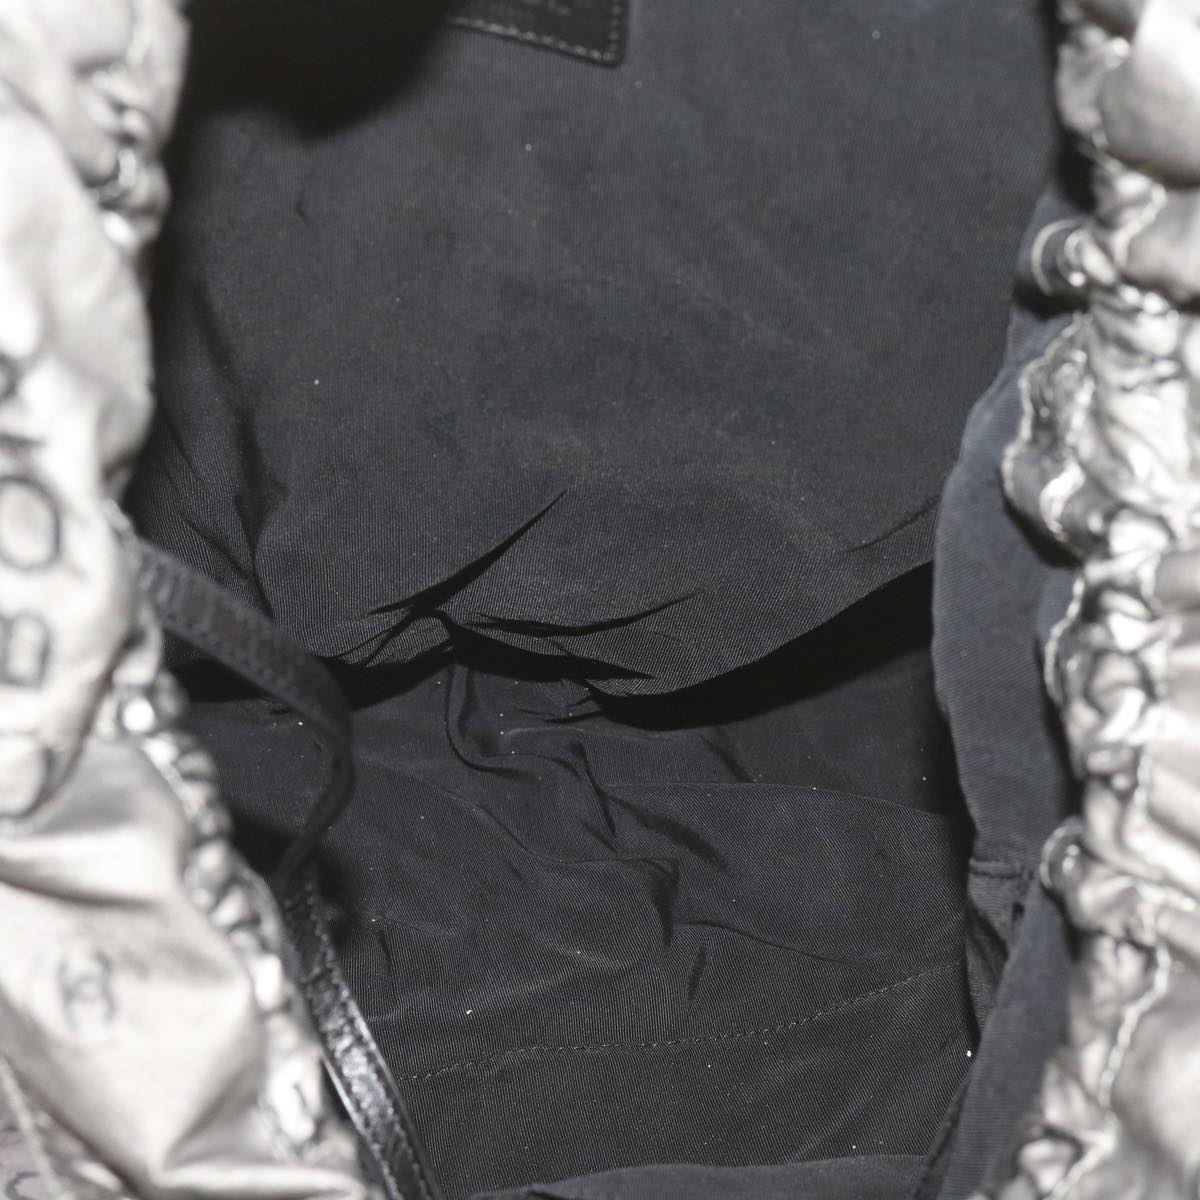 CHANEL Unlimited Tote Bag Nylon Silver CC Auth 66608